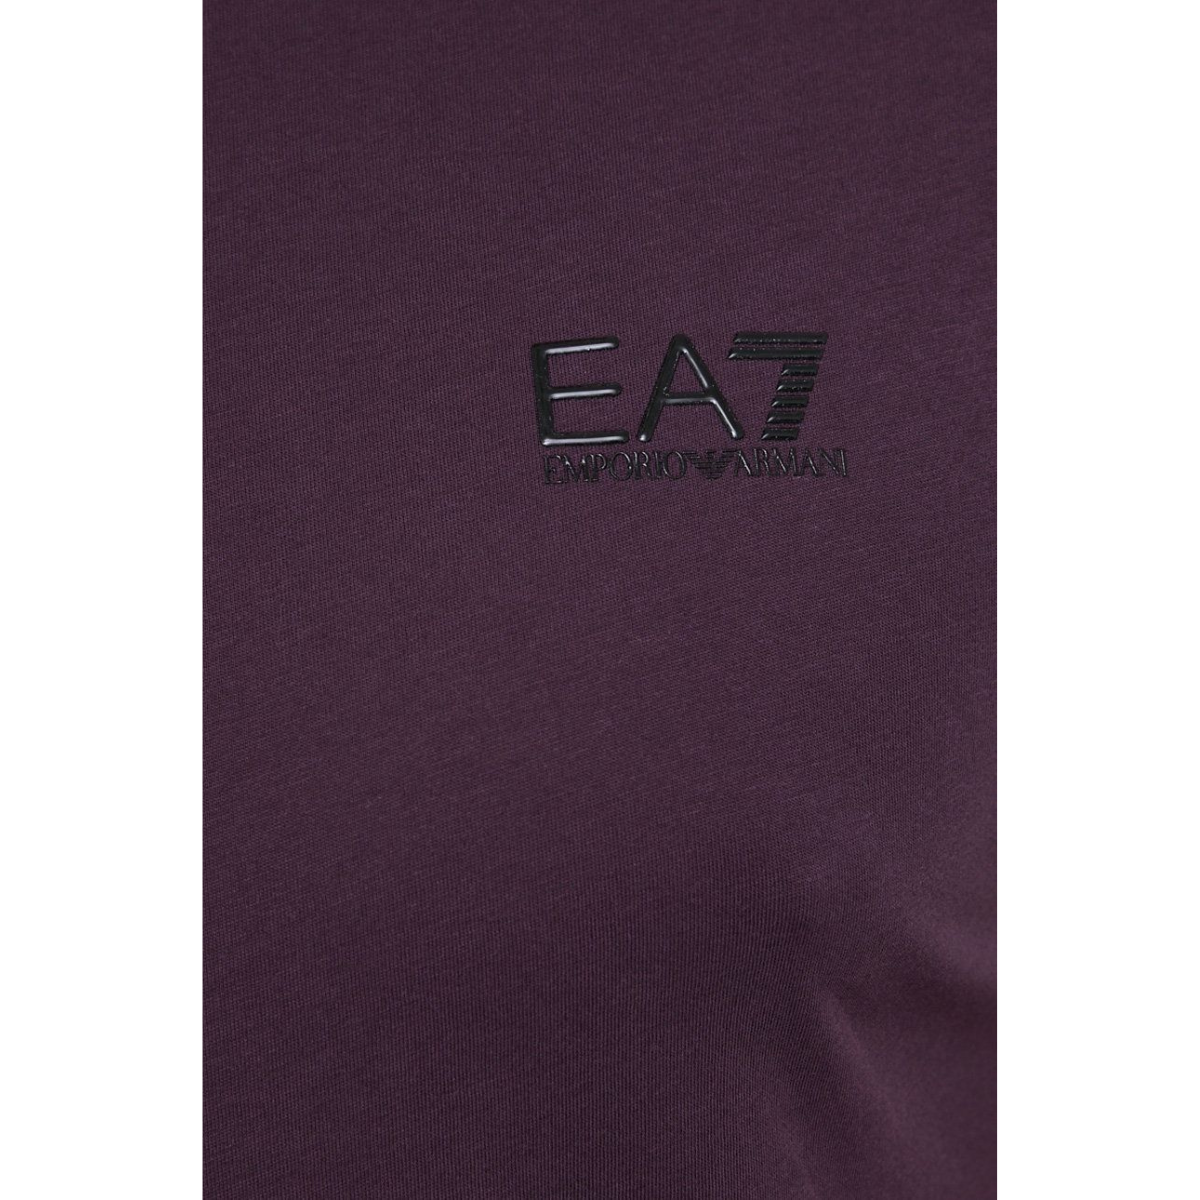 EA7 Emporio Armani - T-Shirt - Purple